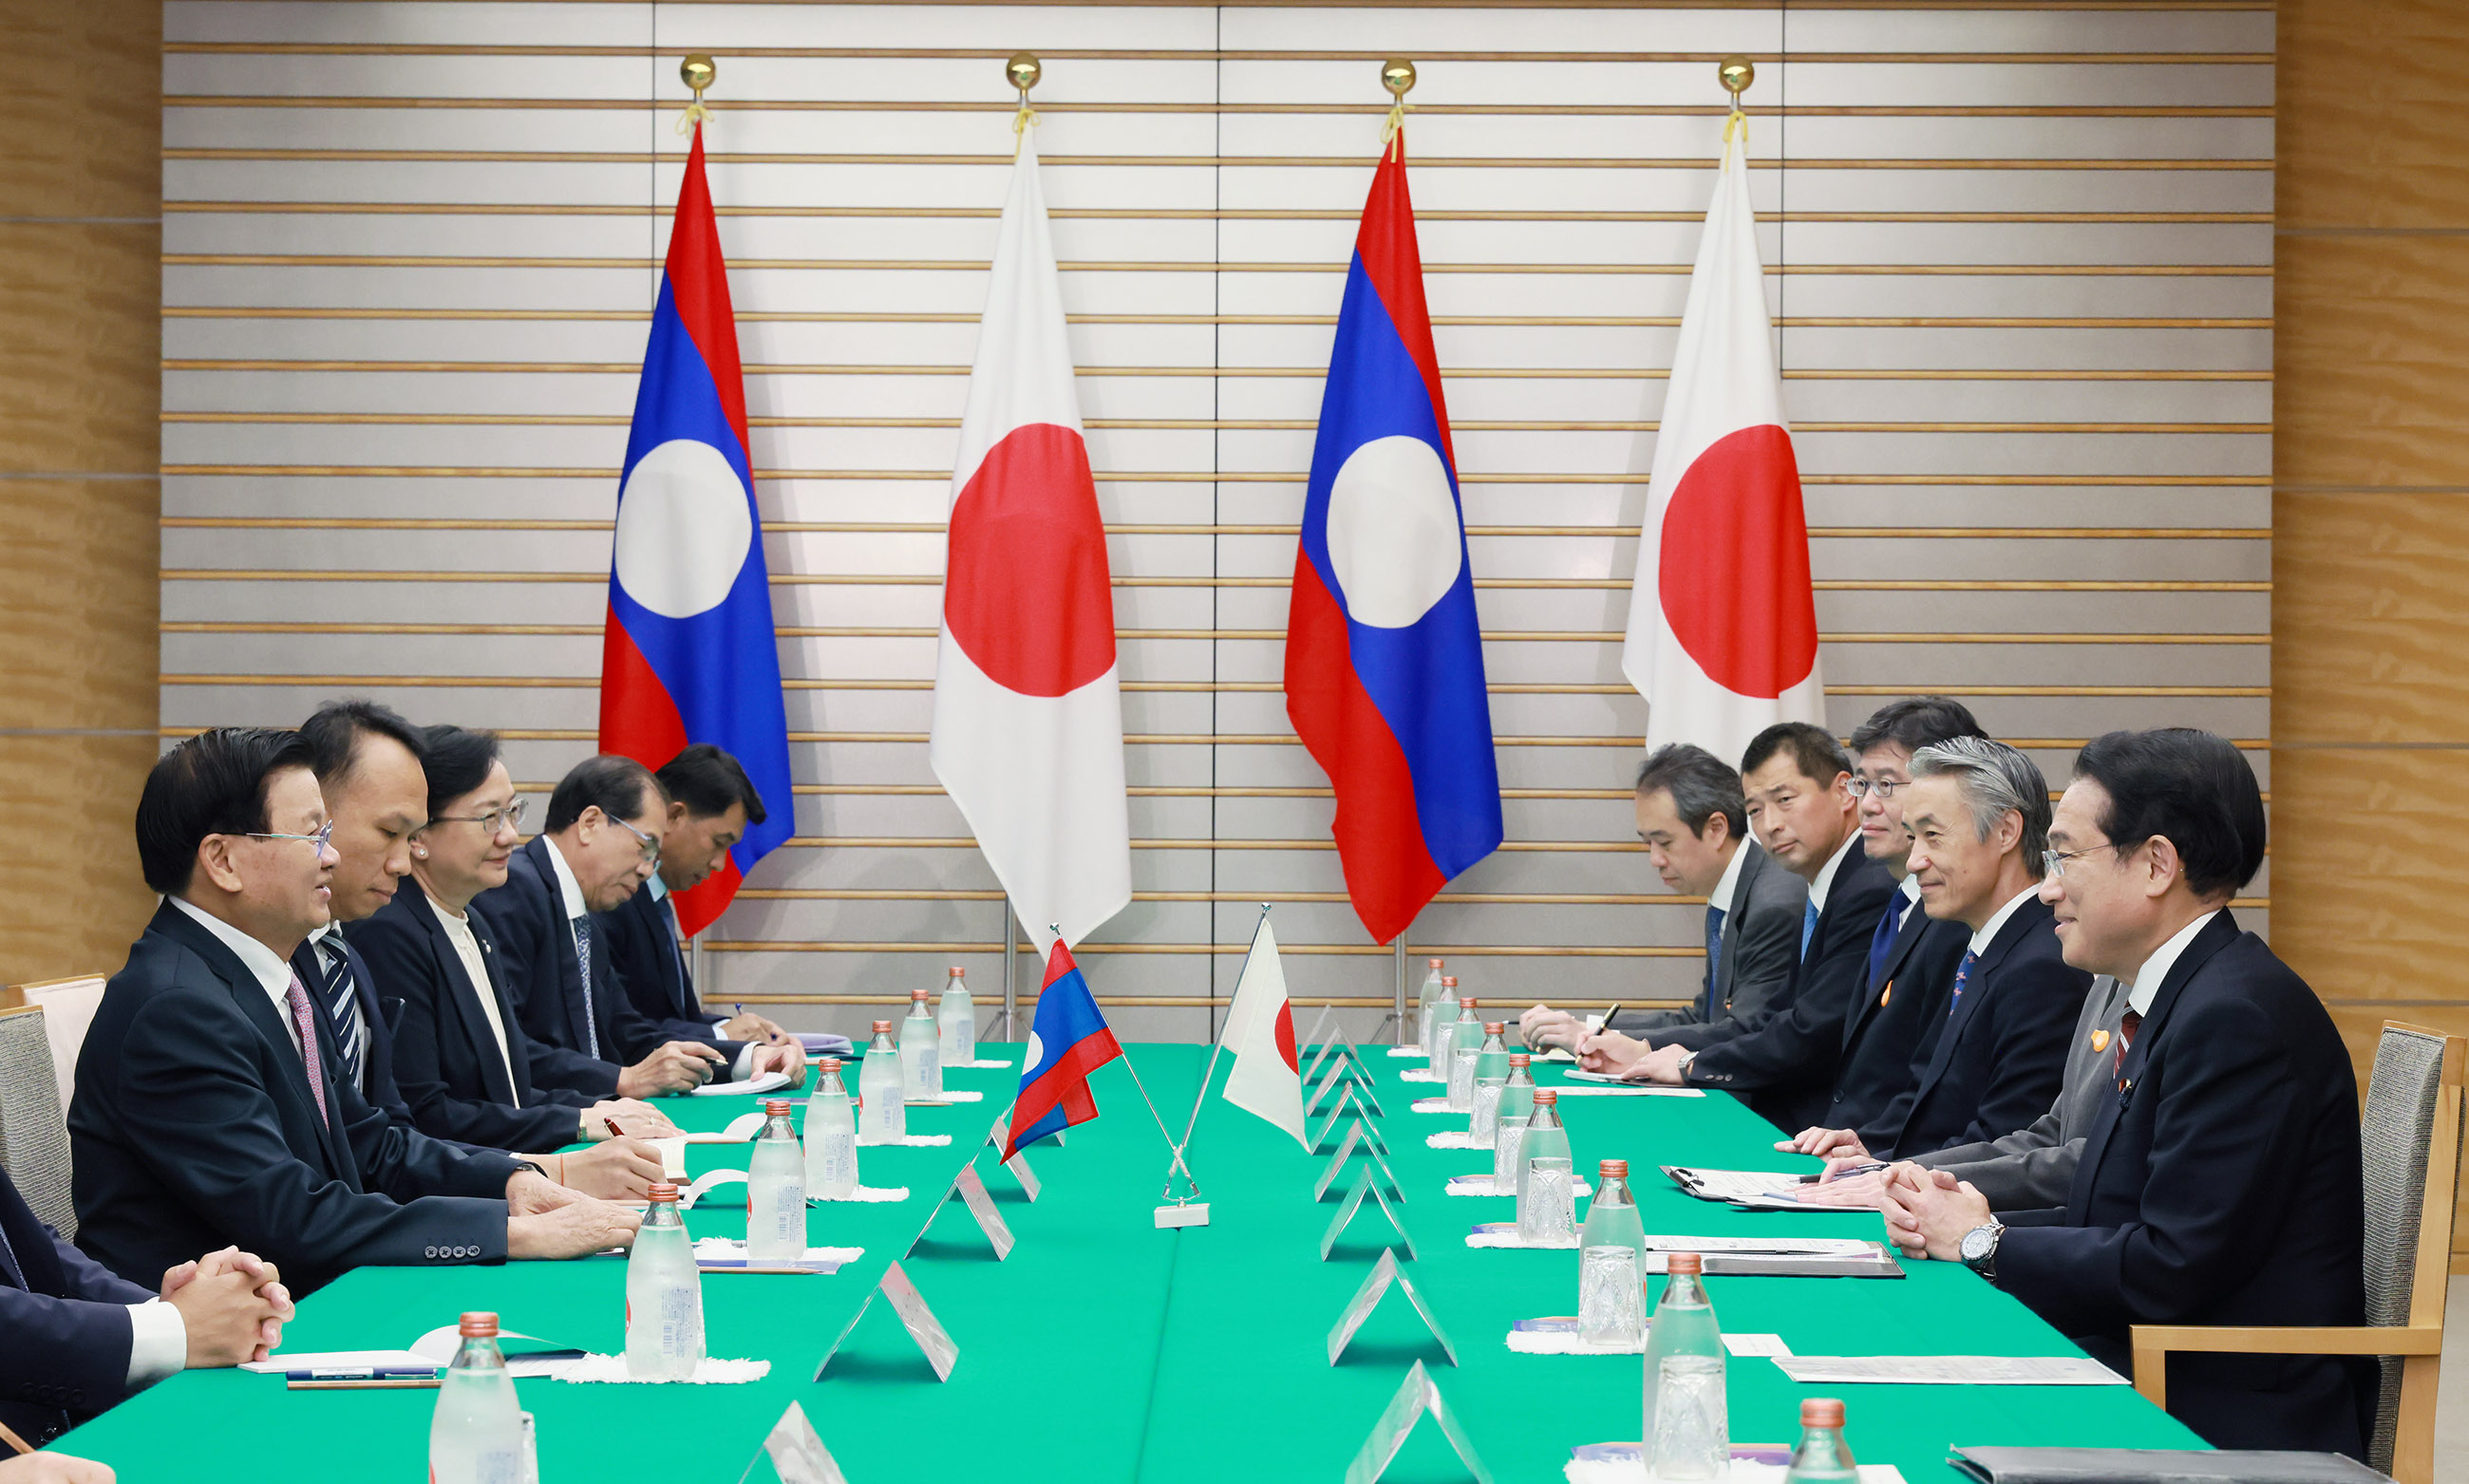 Japan-Laos summit meeting